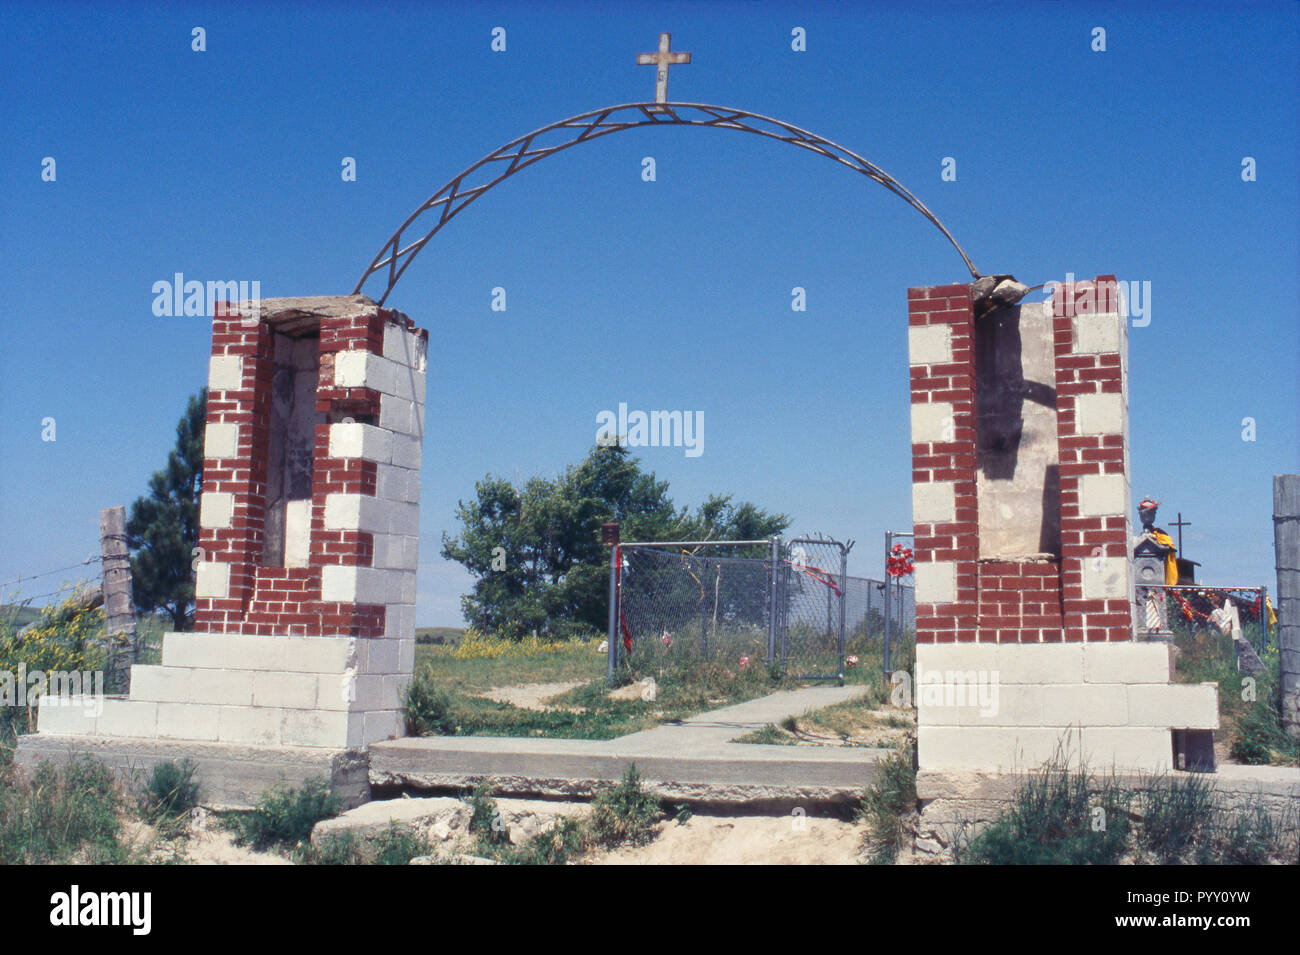 Friedhof für Wounded Knee Massacre Opfer, Sioux Reservation Pine Ridge, South Dakota. Foto Stockfoto